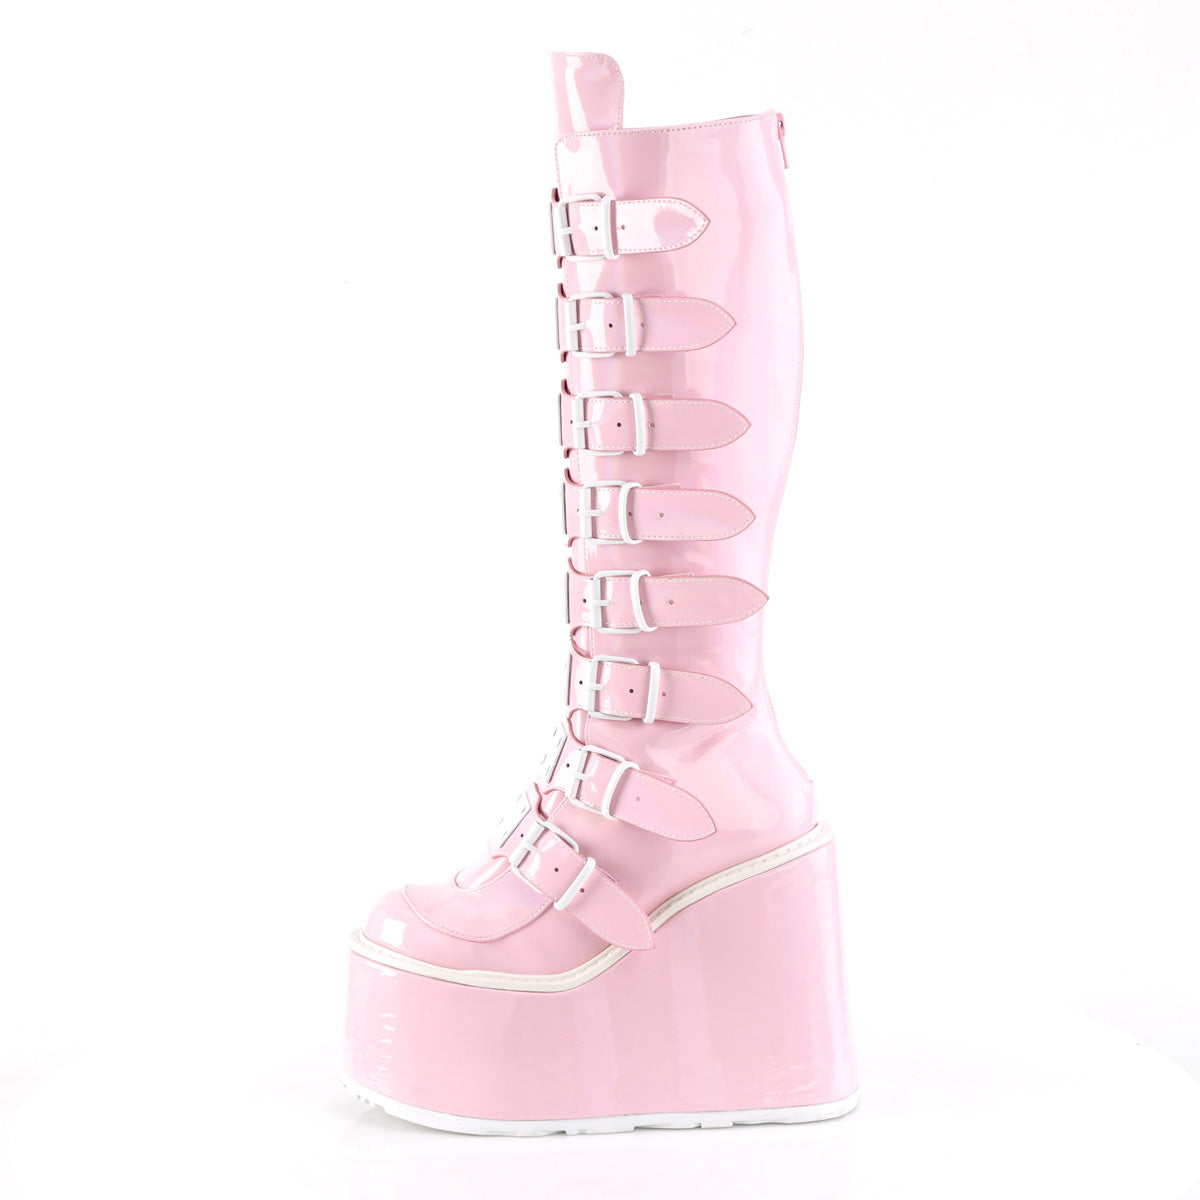 SWING-815 Demonia B.Pink Hologram Women's Mid-Calf & Knee High Boots [Demonia Cult Alternative Footwear]